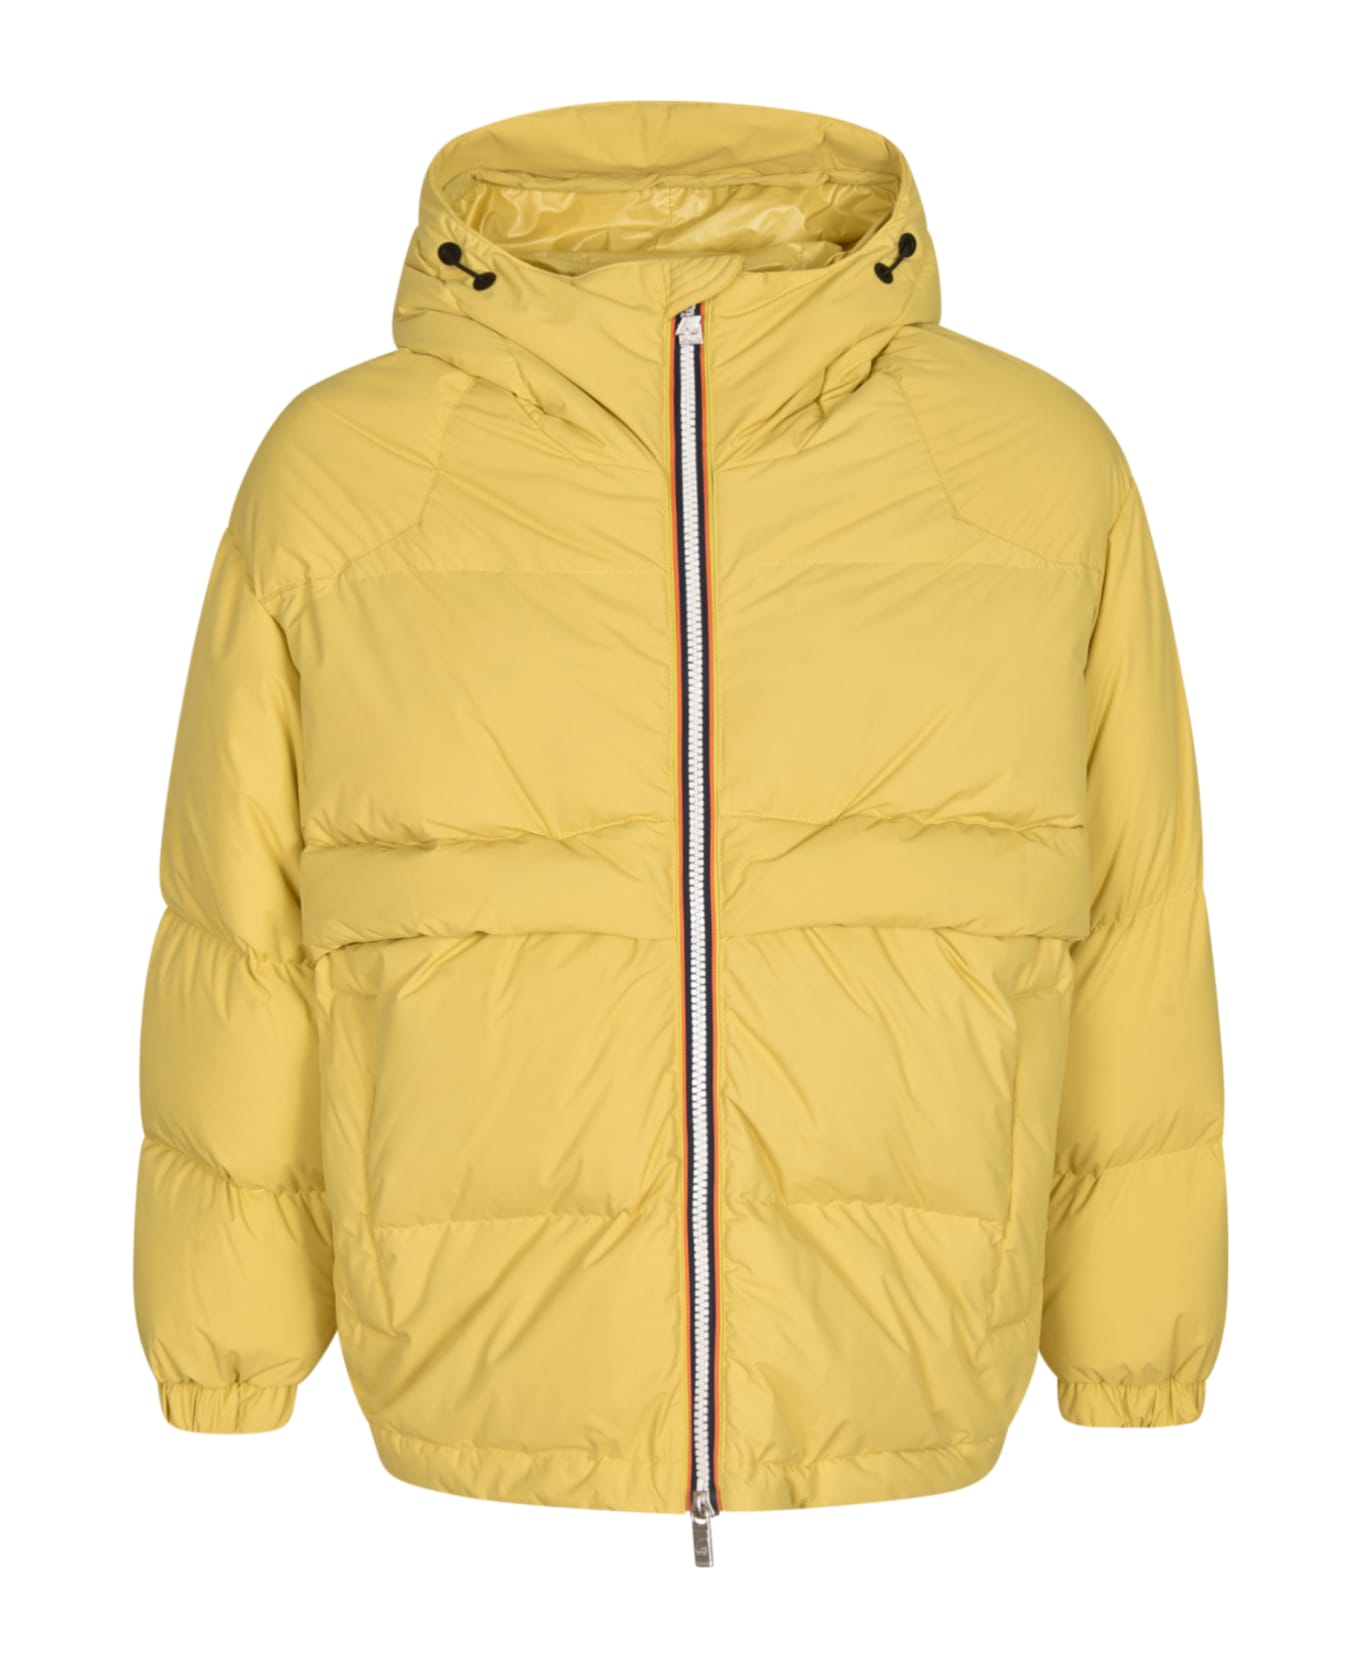 K-Way Reversible Padded Jacket - Yellow